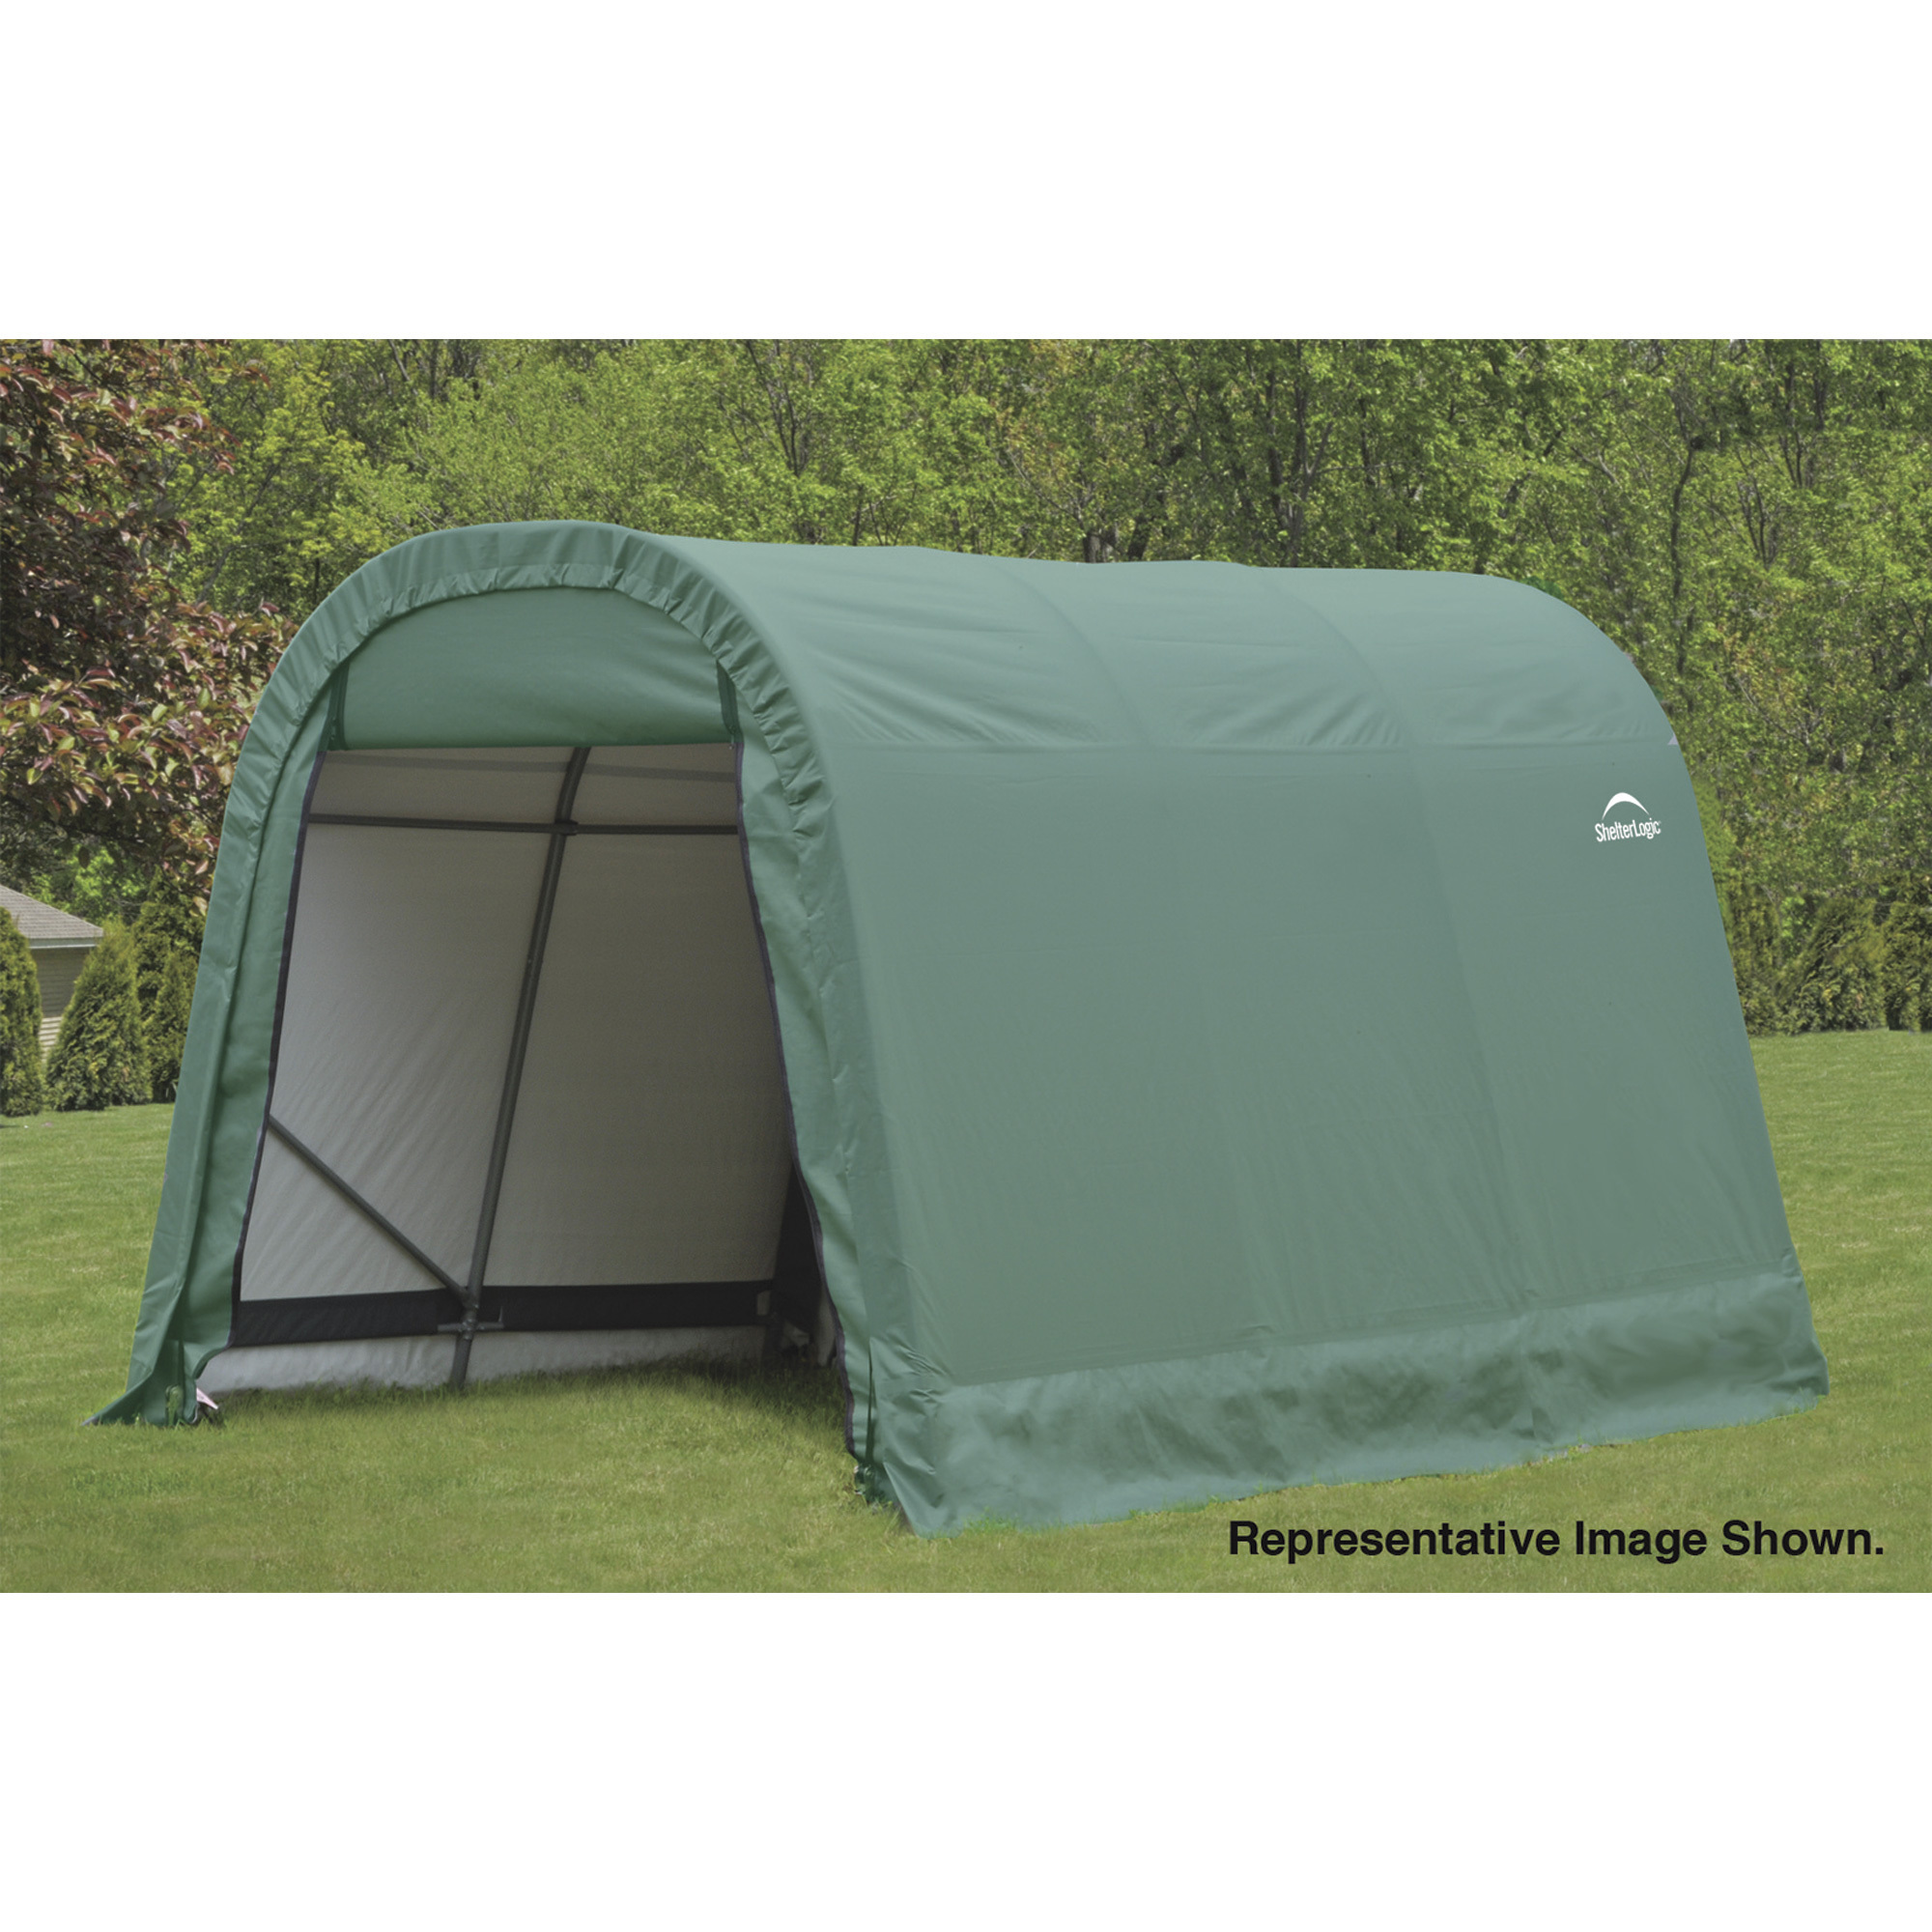 ShelterLogic Round Style Shed/Storage Shelter, Green, 12ft.L x 8ft.W x 8ft.H, Model 76814